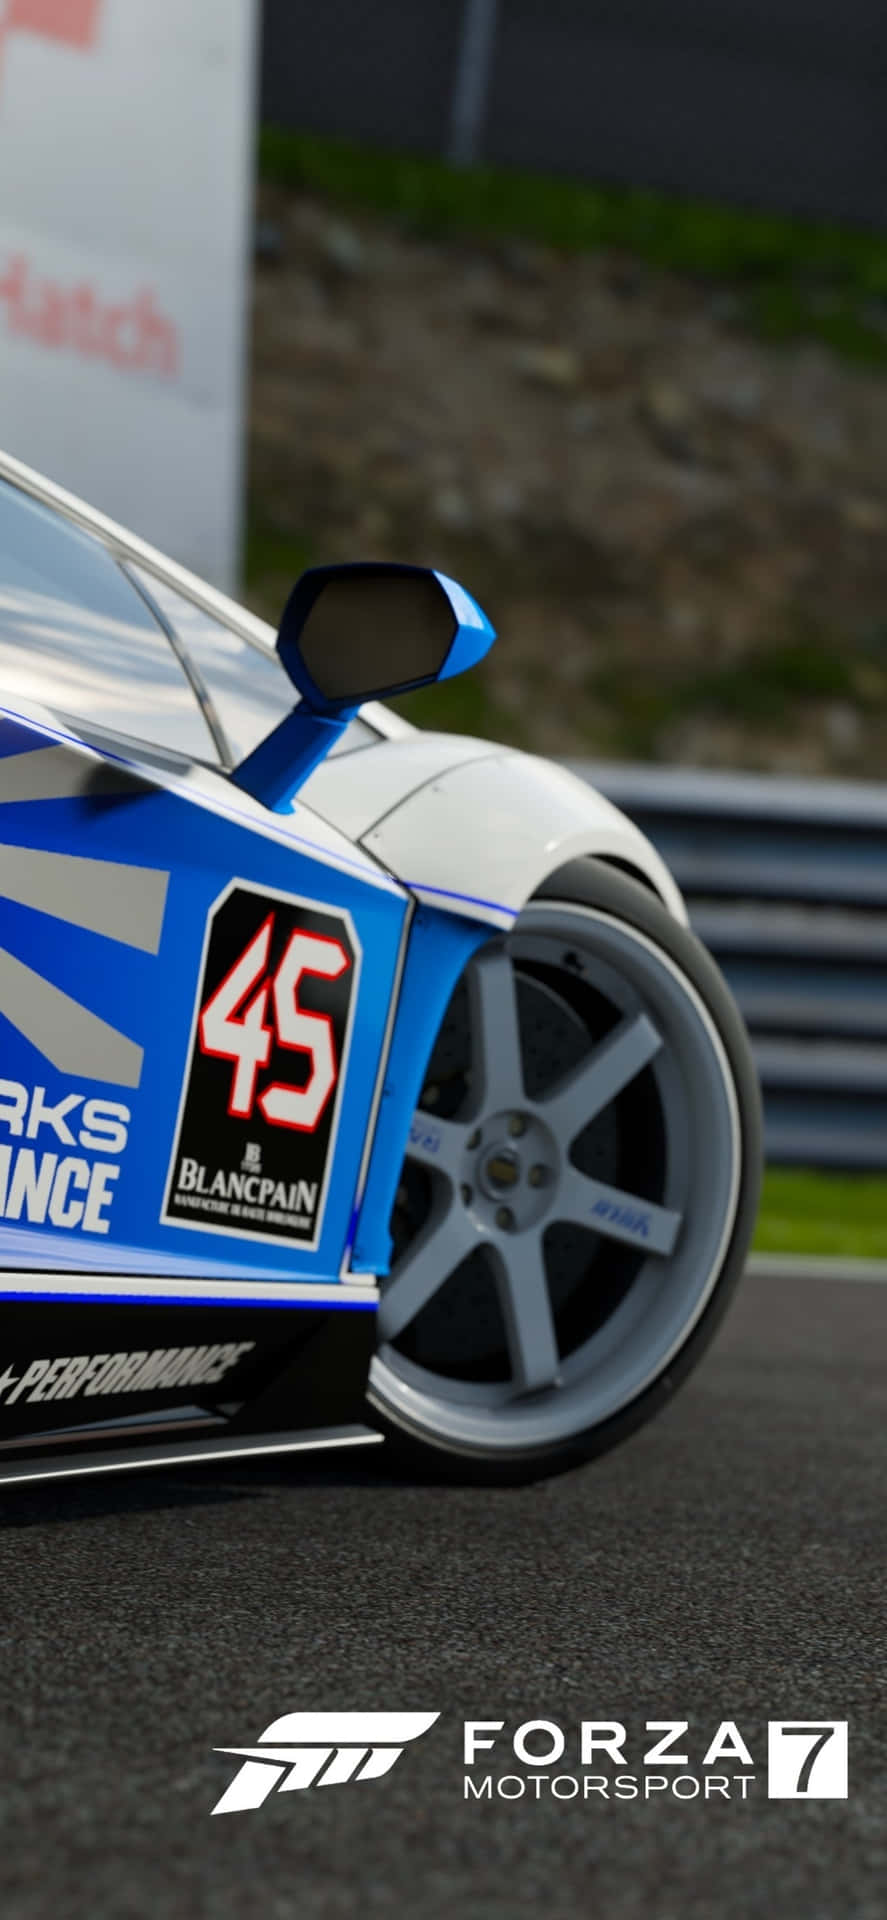 Sfondoforza Motorsport 7 Per Iphone X Con Macchina Bianca E Blu